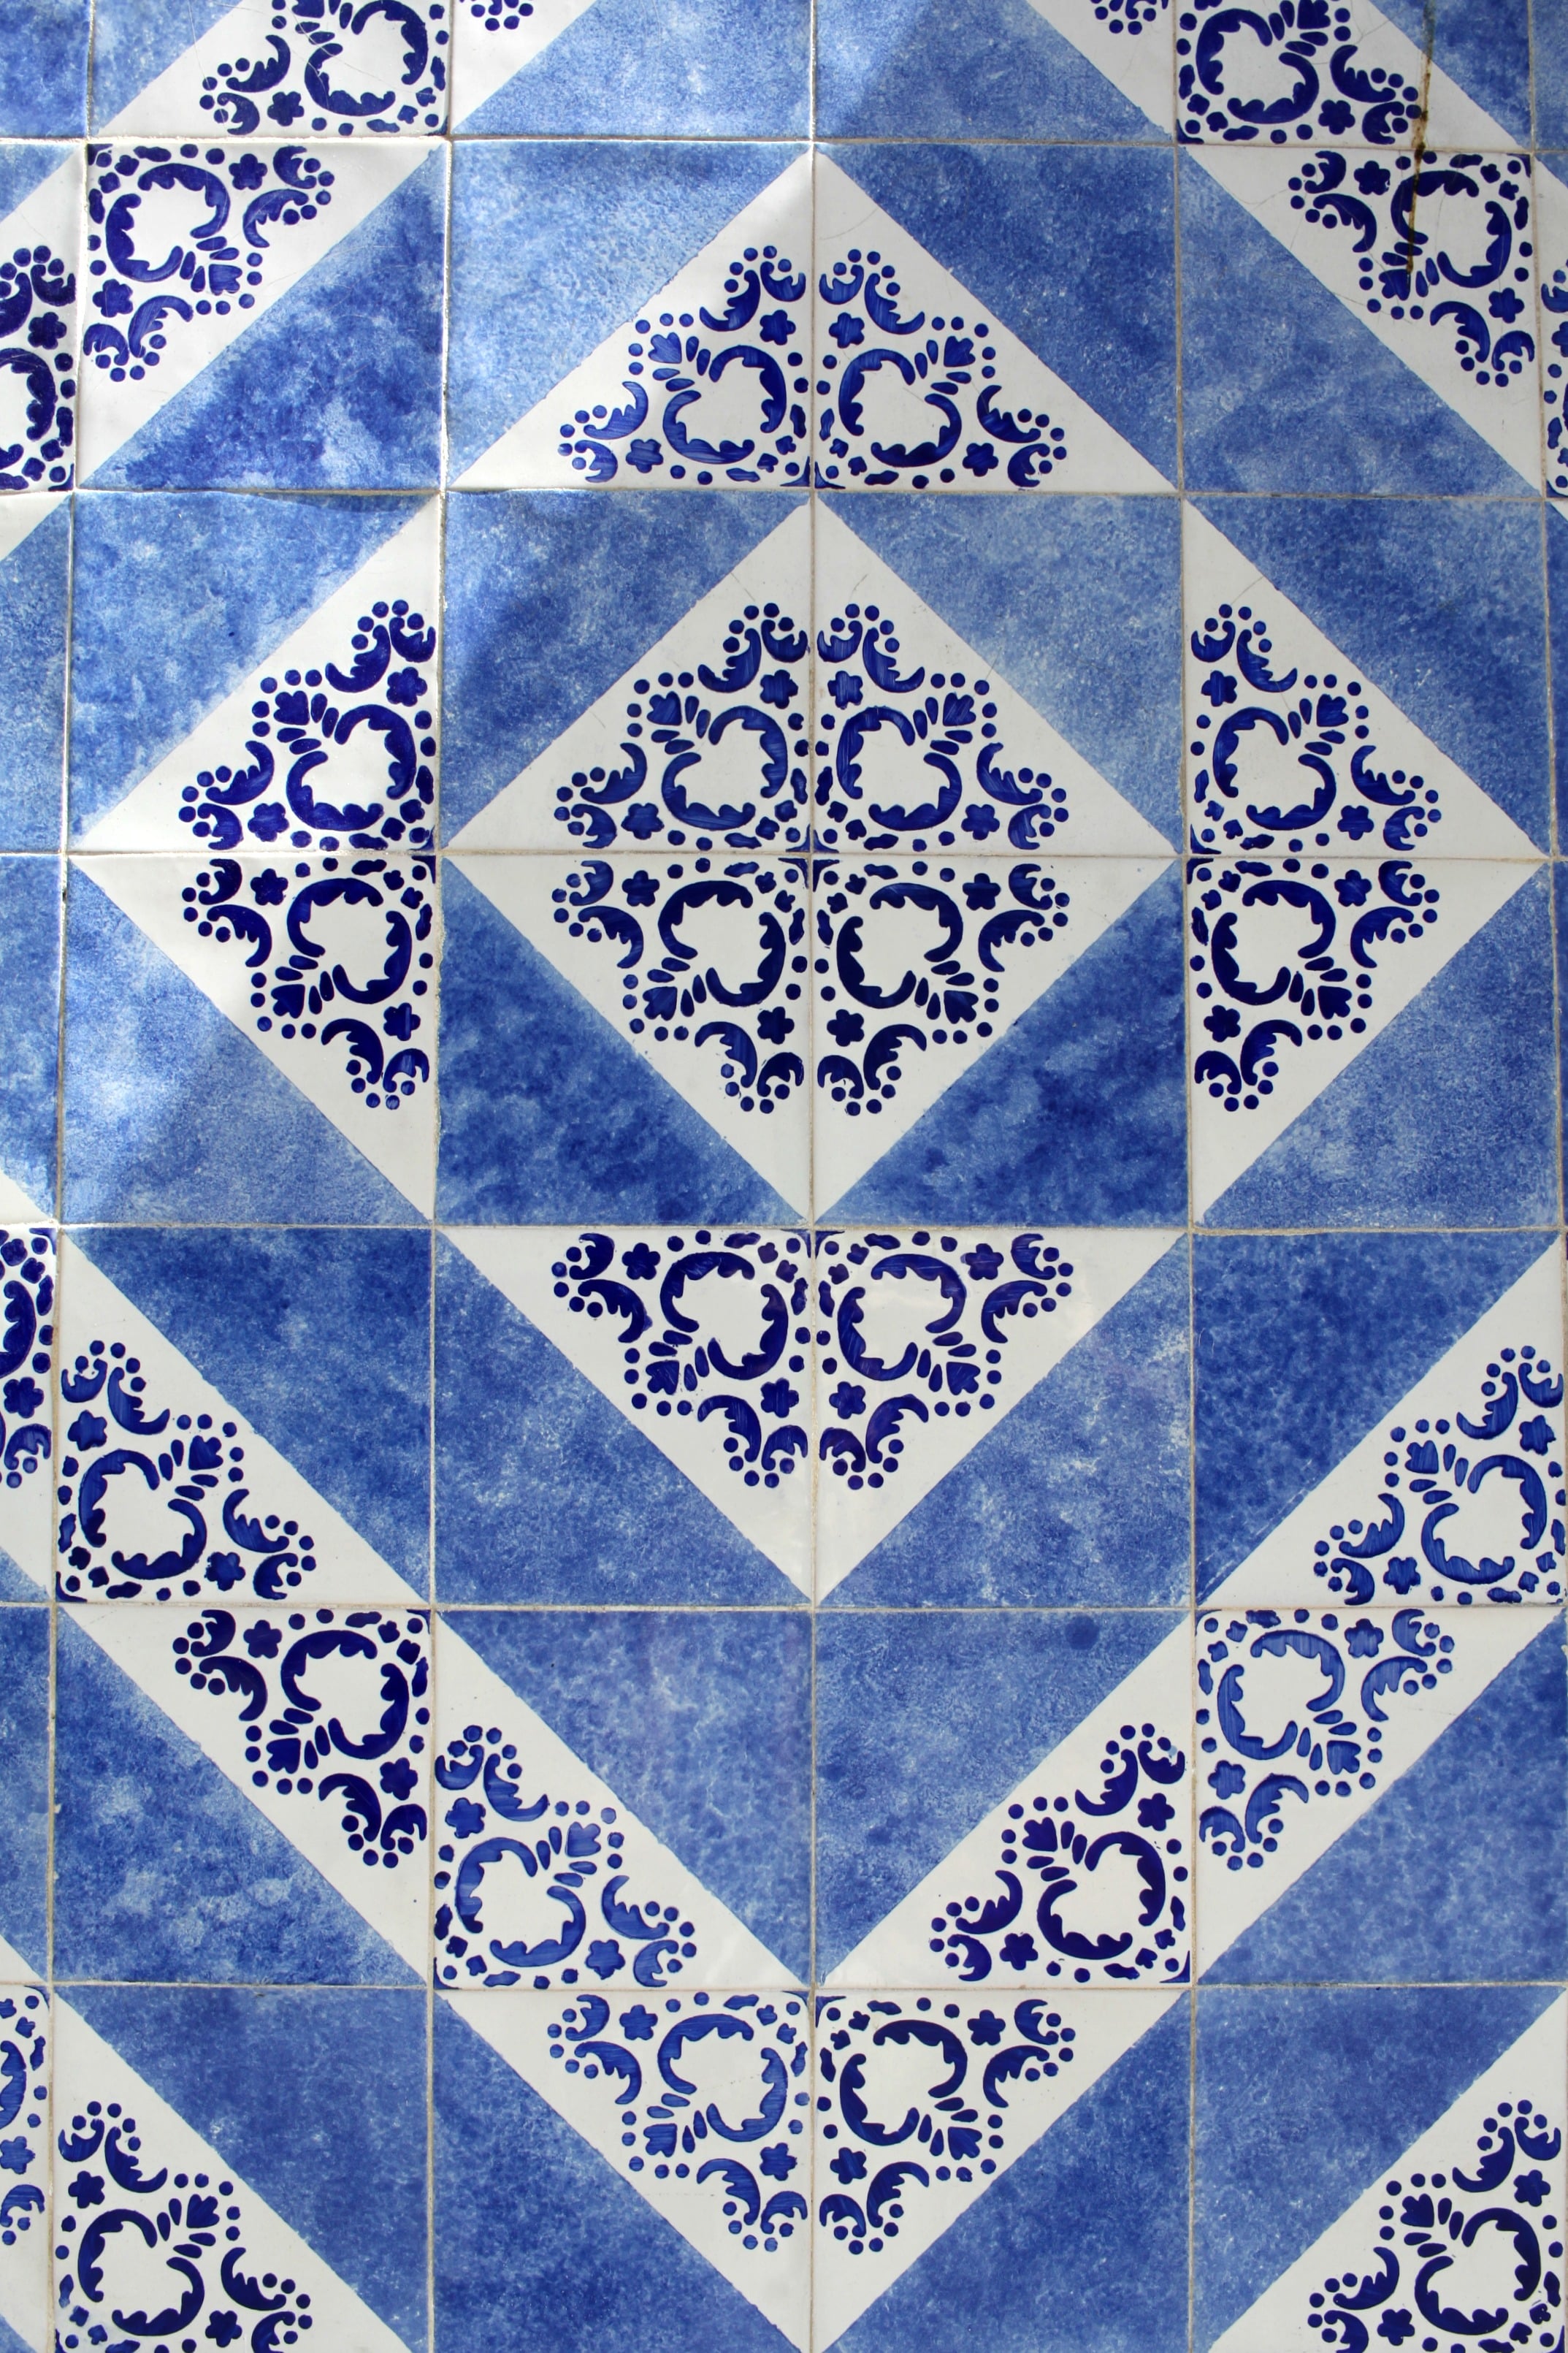 Blue and White Tiles in Porto, Portugal